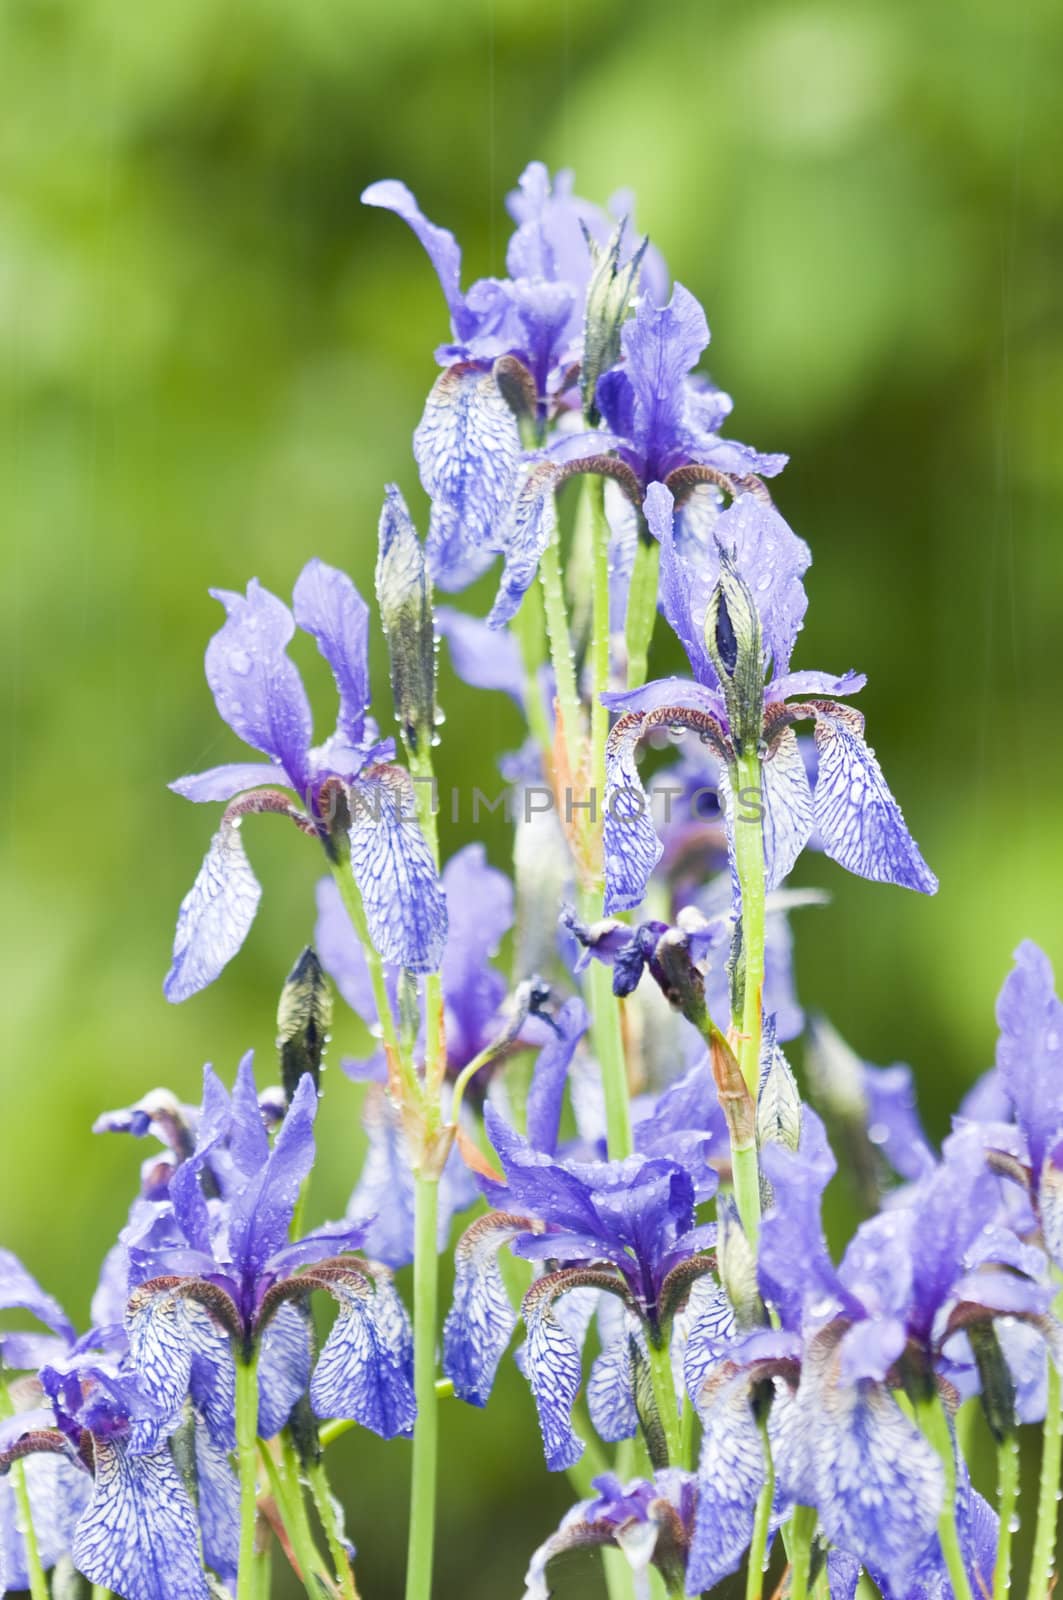 Iris, blue flowers under the rain